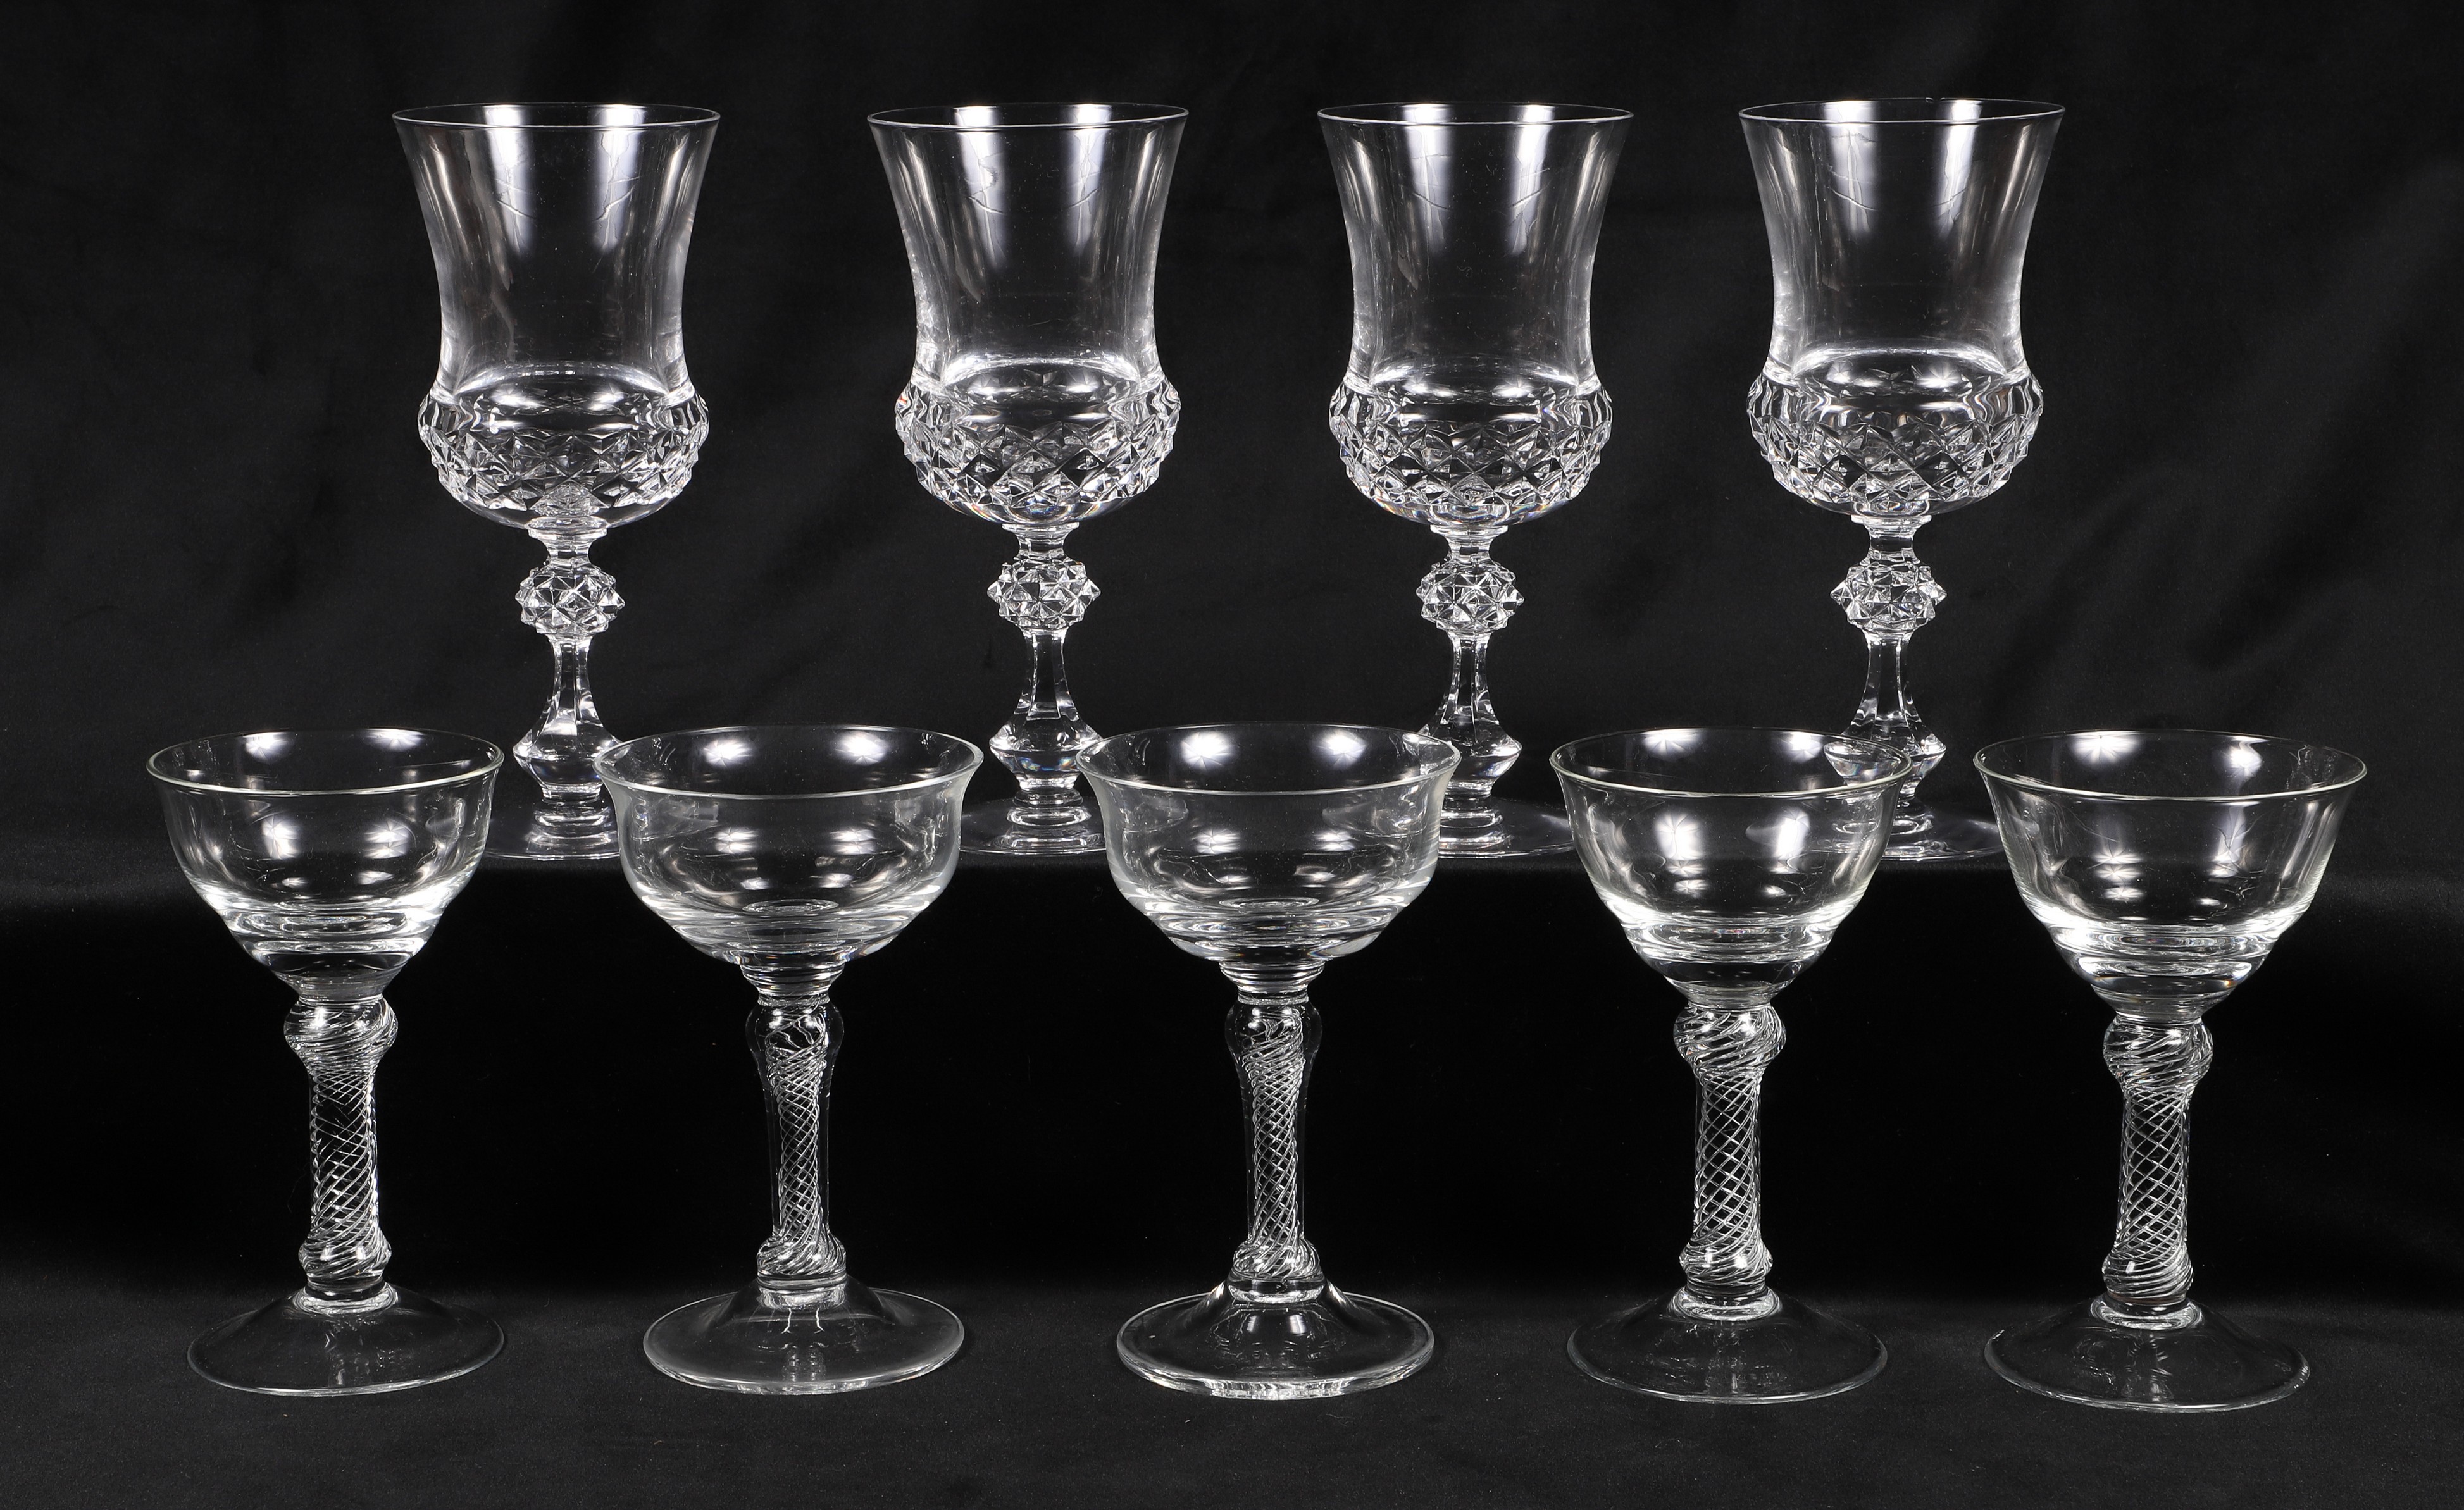  9 Crystal wine glasses c o 5  2e15d6